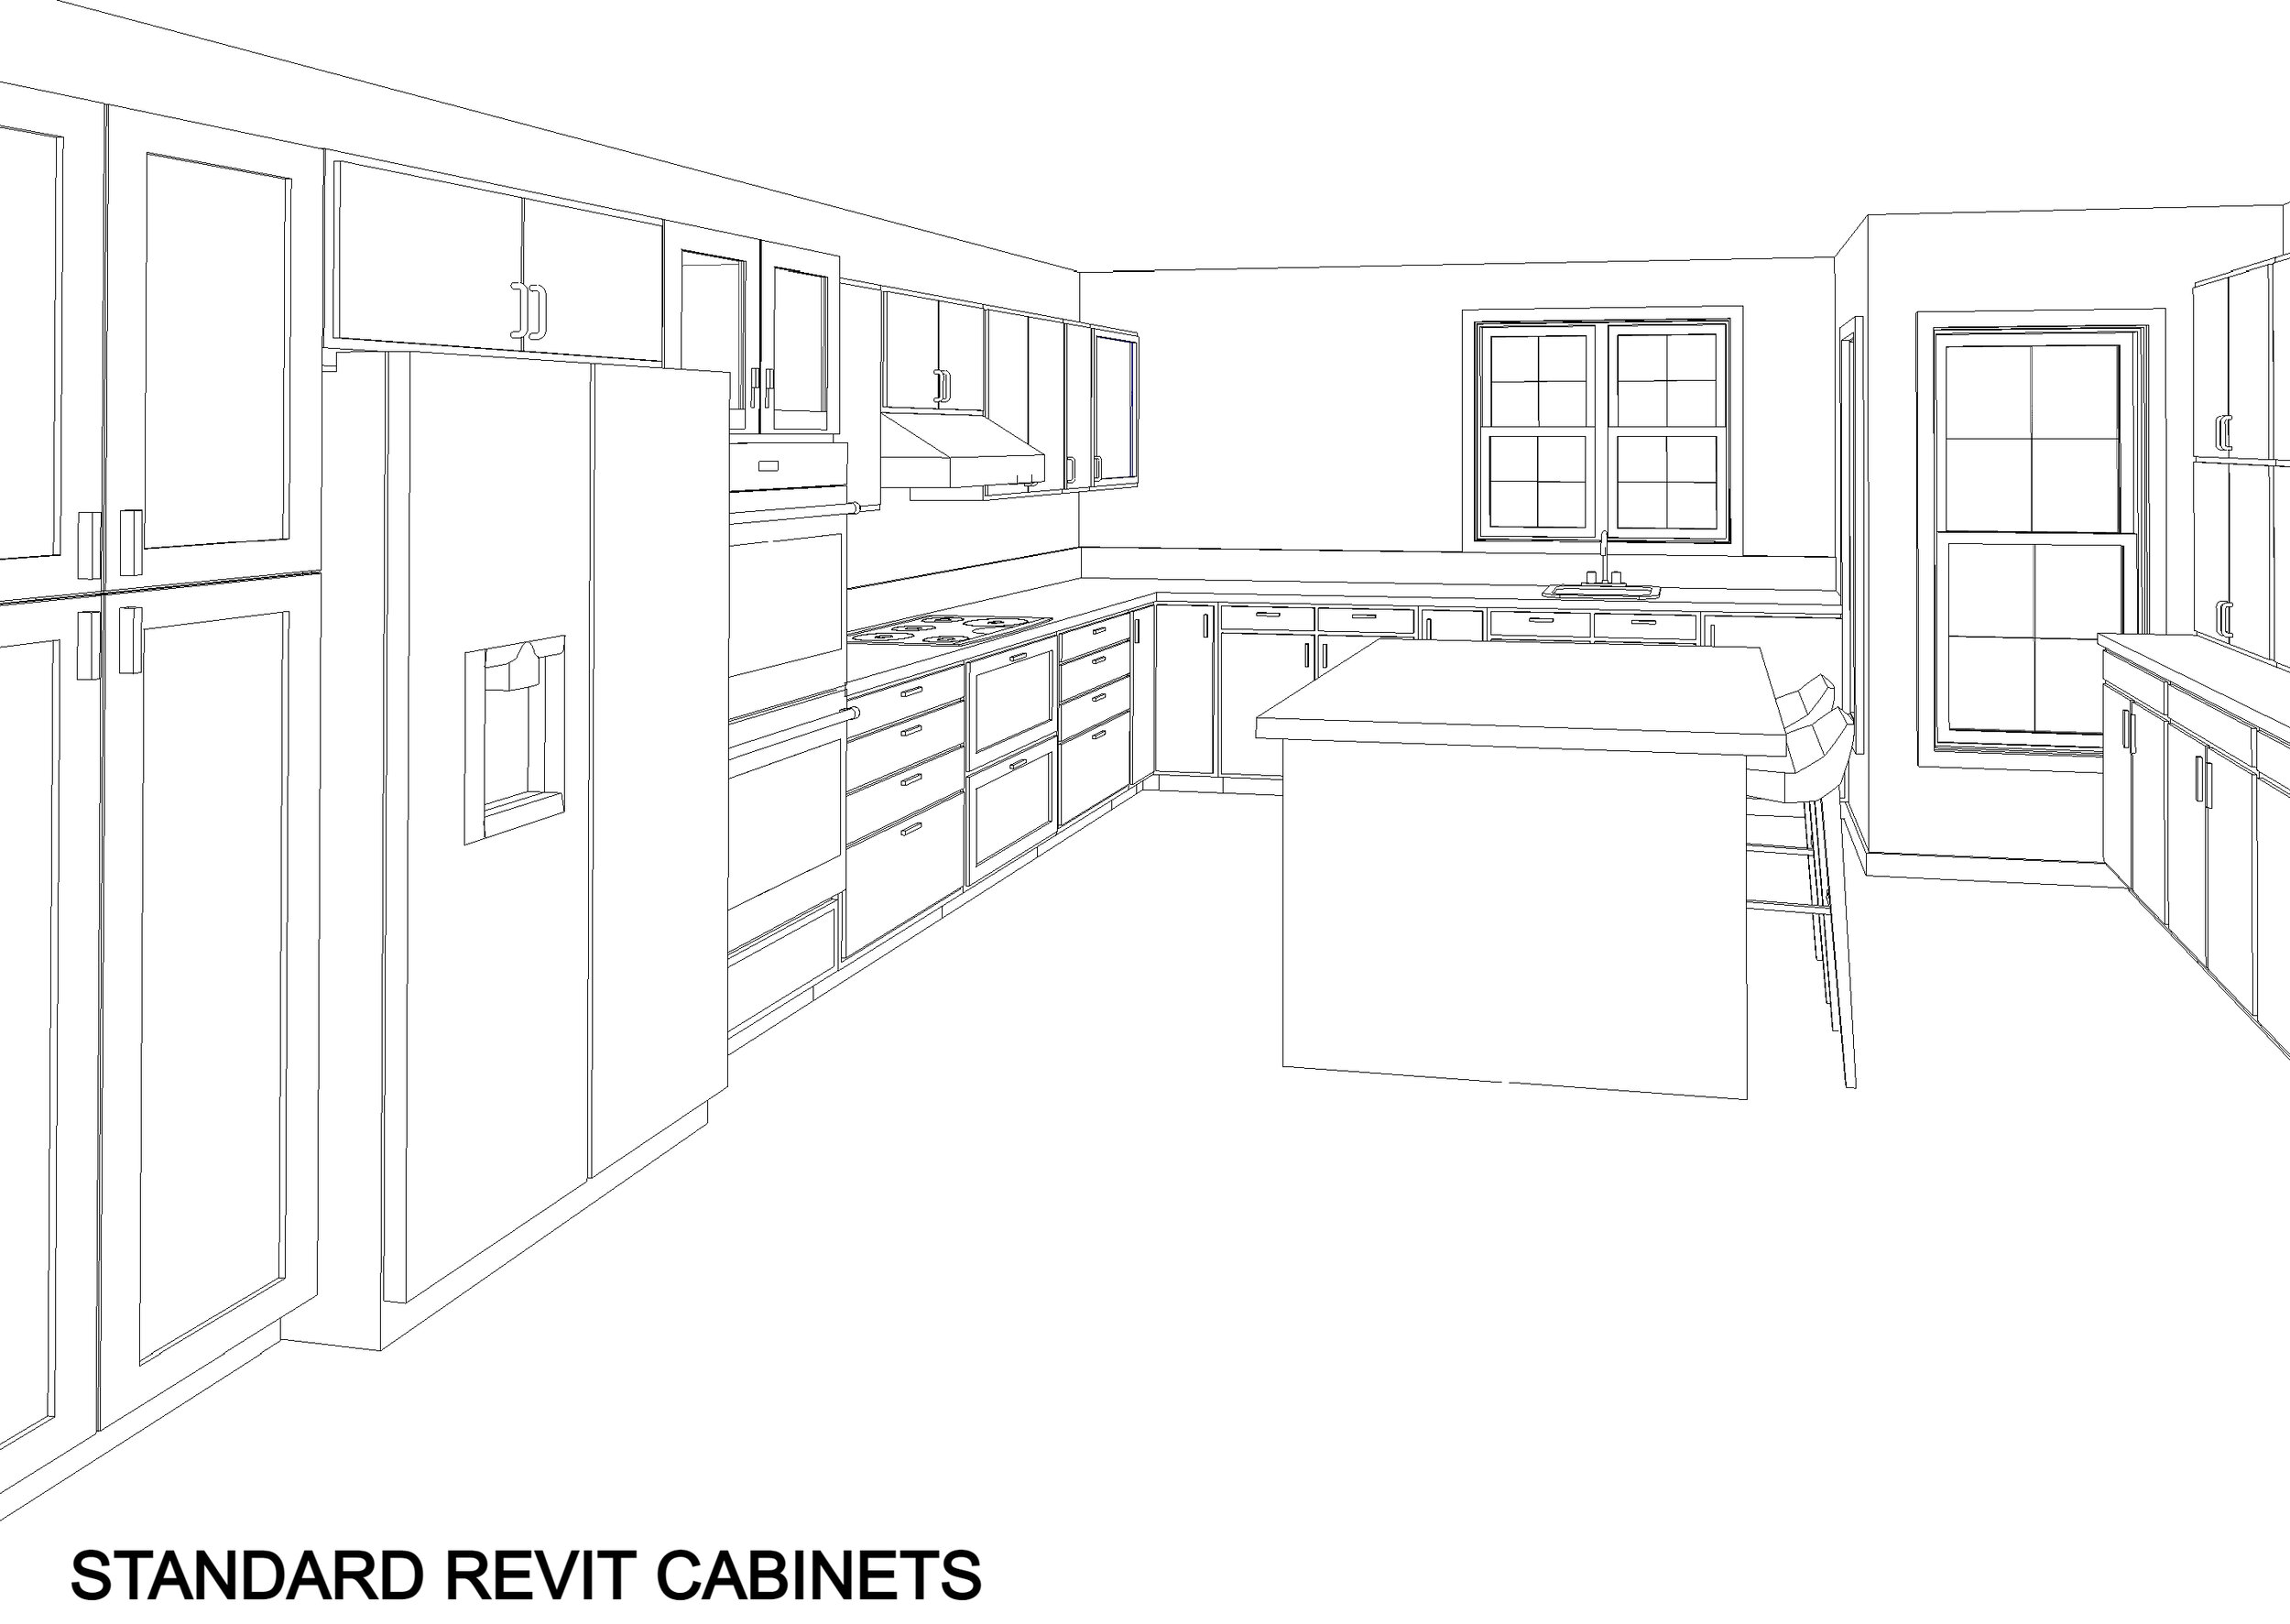 Revit family cabinet standard kitchen layout 3d options 